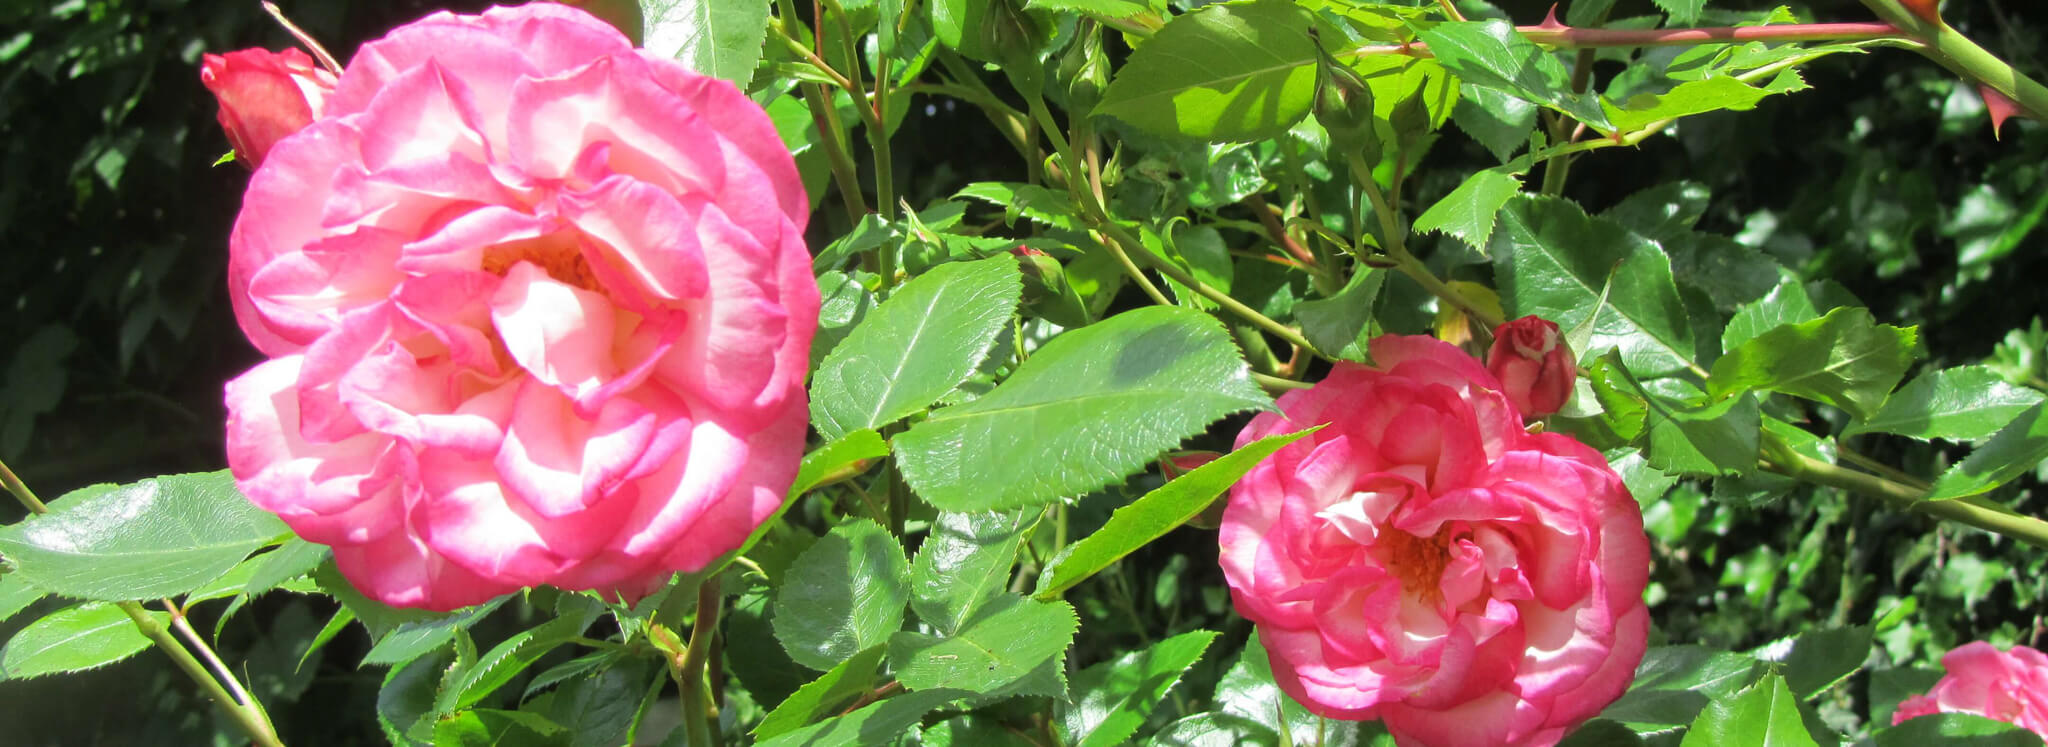 Rosa Blume in Garten